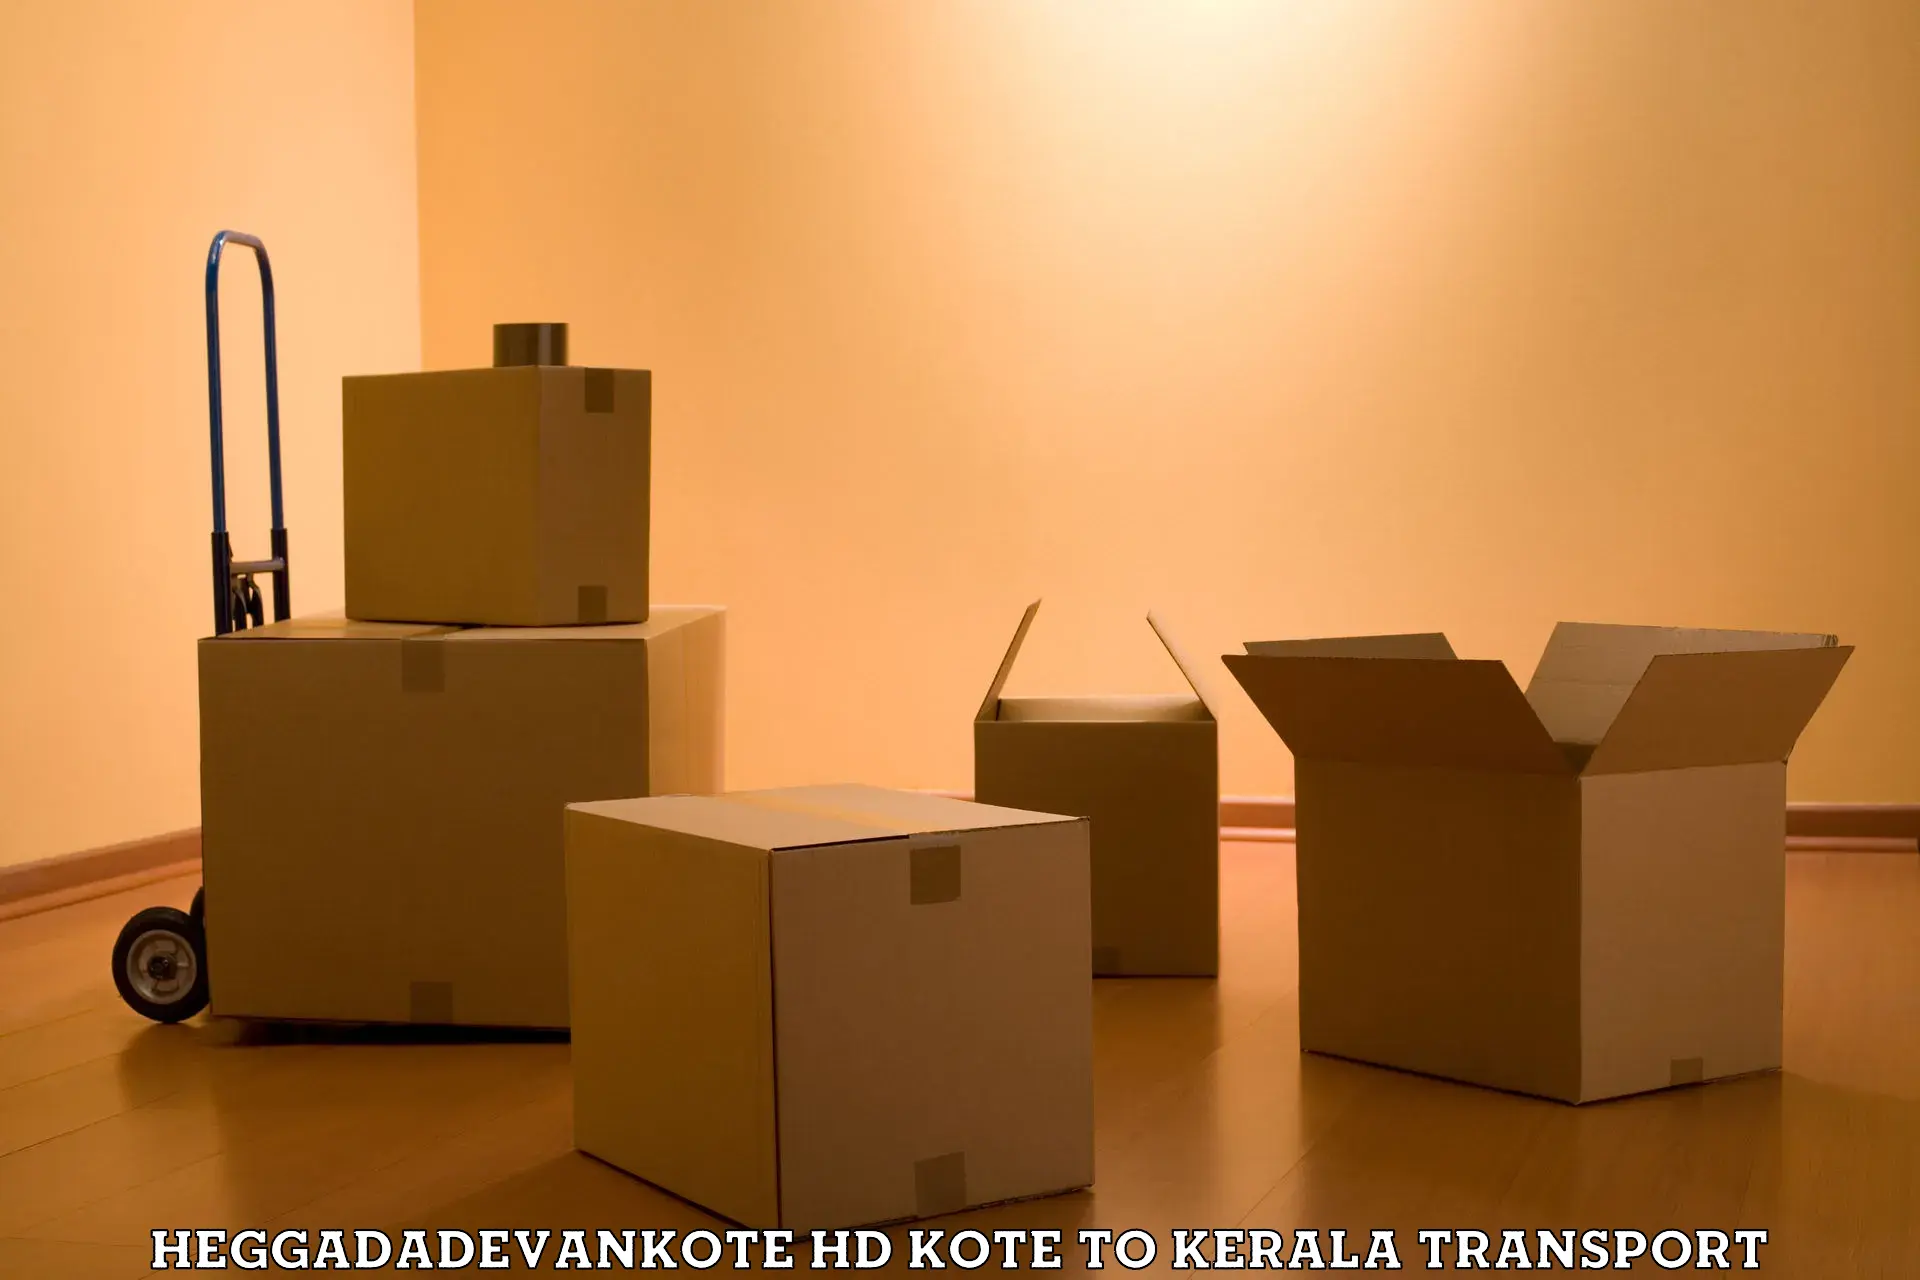 Commercial transport service Heggadadevankote HD Kote to Pulpally